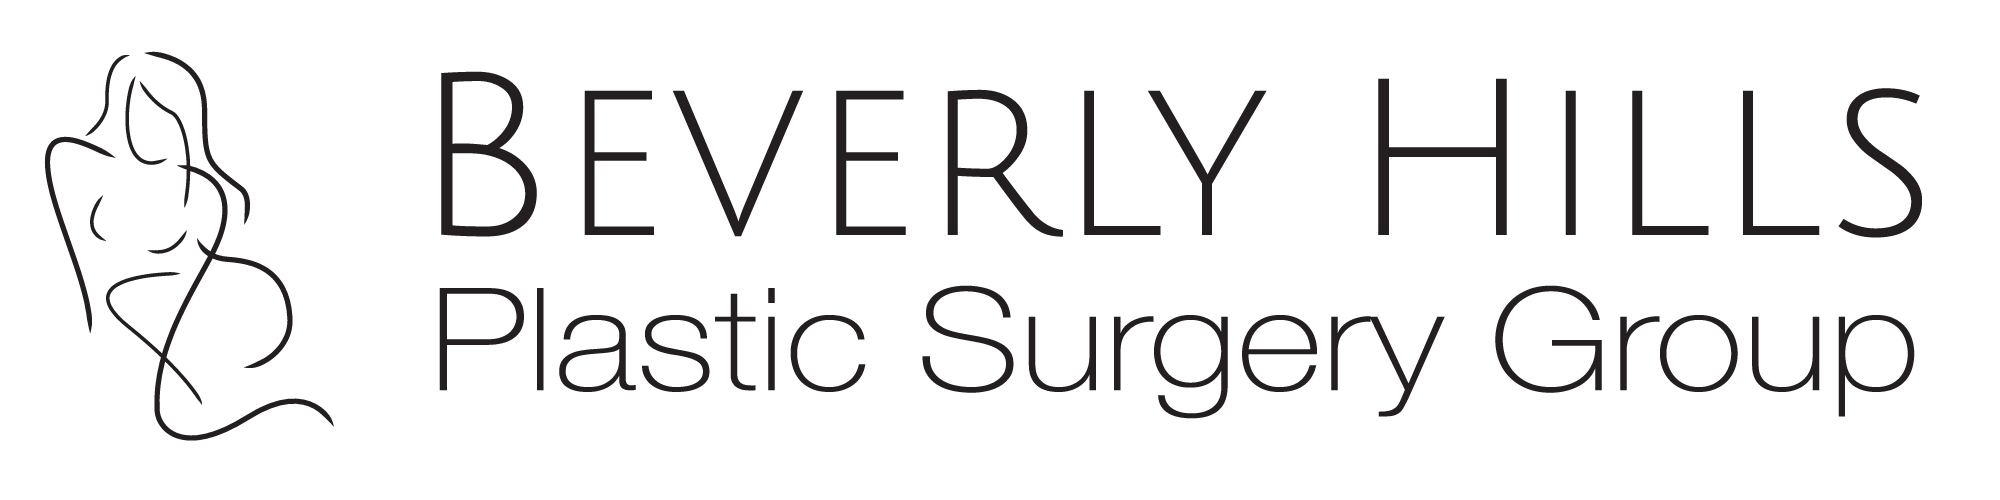 Rinoplastia Beverly Hills | Beverly Hills Plastic Surgery Group